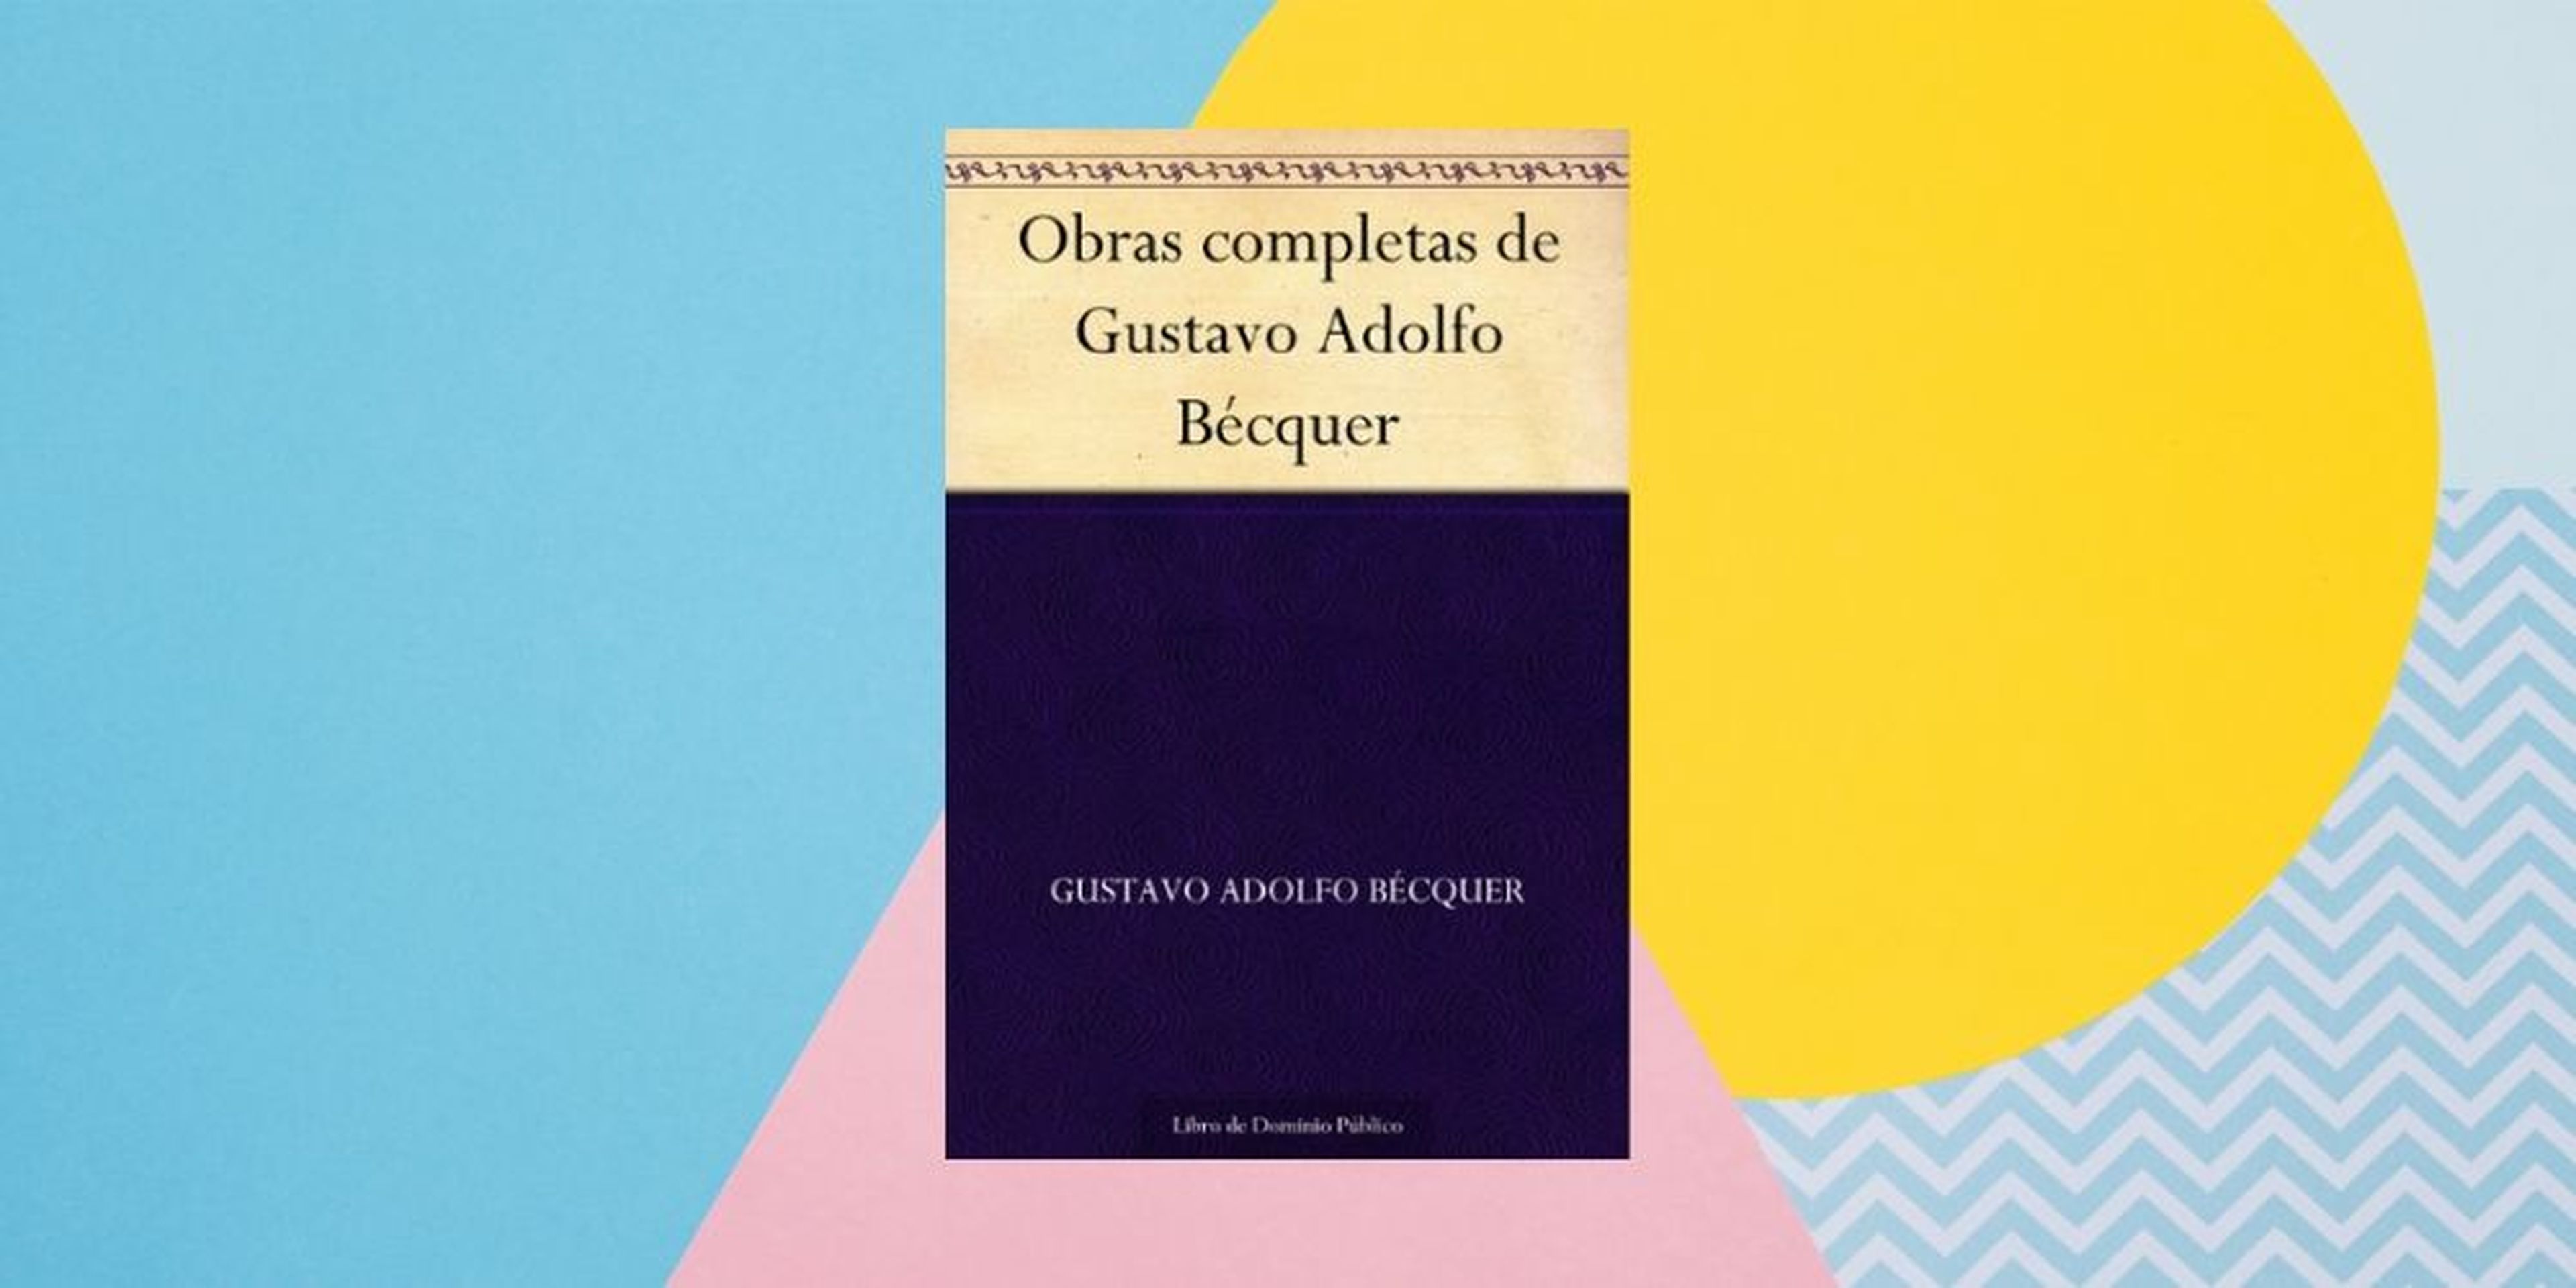 ‘Obras completas de Gustavo Adolfo Bécquer”, de Gustavo Adolfo Bécquer